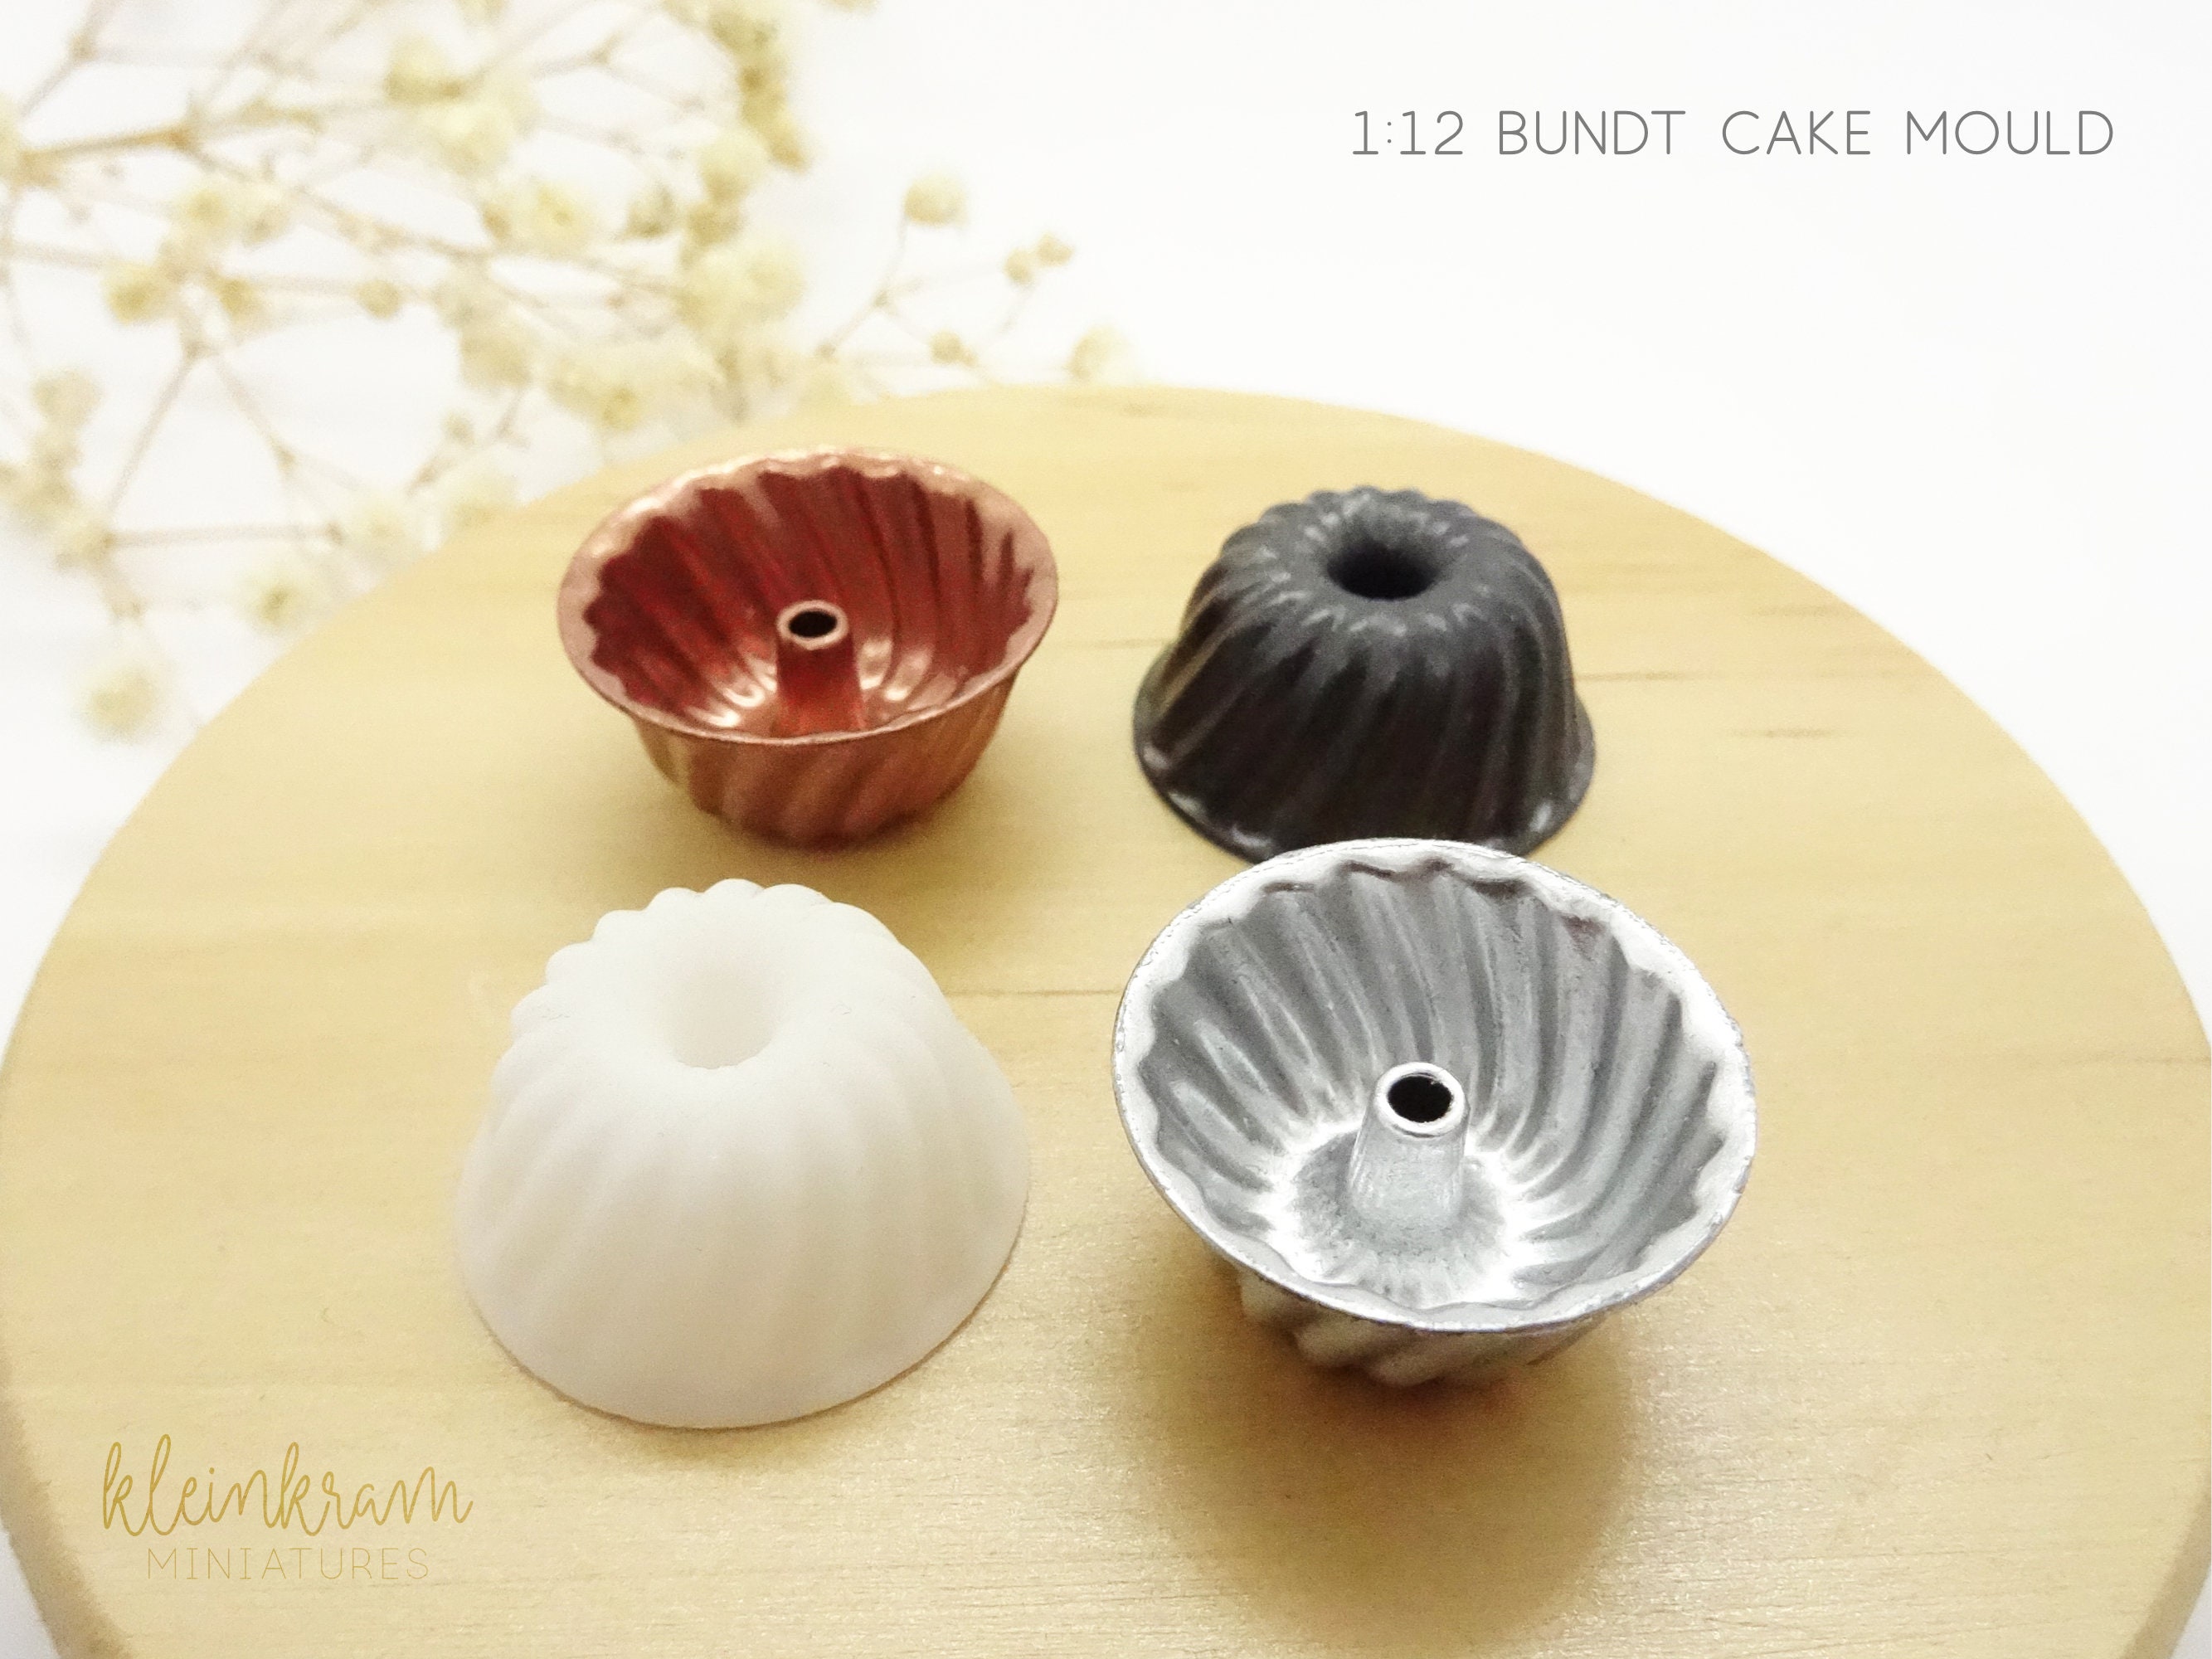 Dash Mini Heart Bundt Cake Maker 1 ct